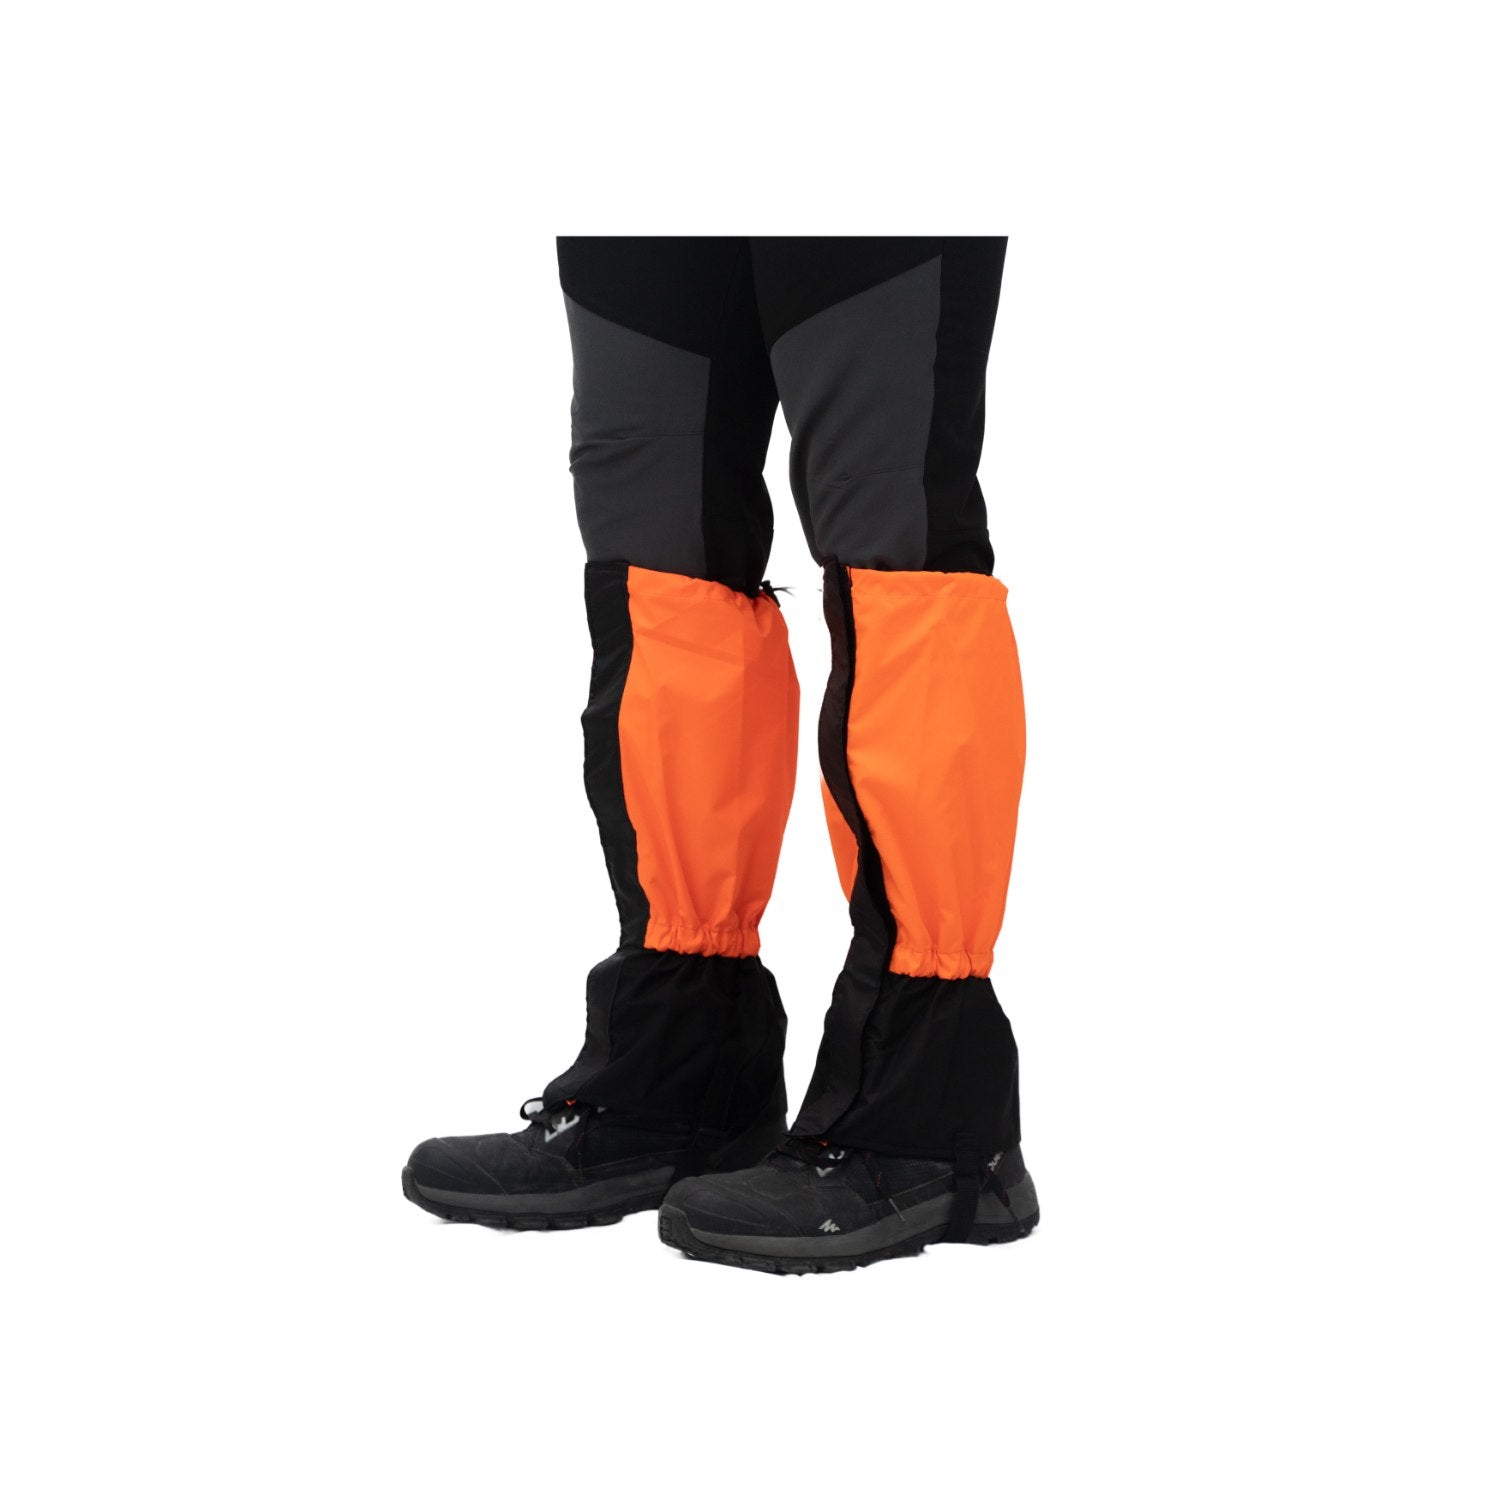 Buy Gokyo Kaza Shoe Gaiters Orange | Snow Gaiters at Gokyo Outdoor Clothing & Gear